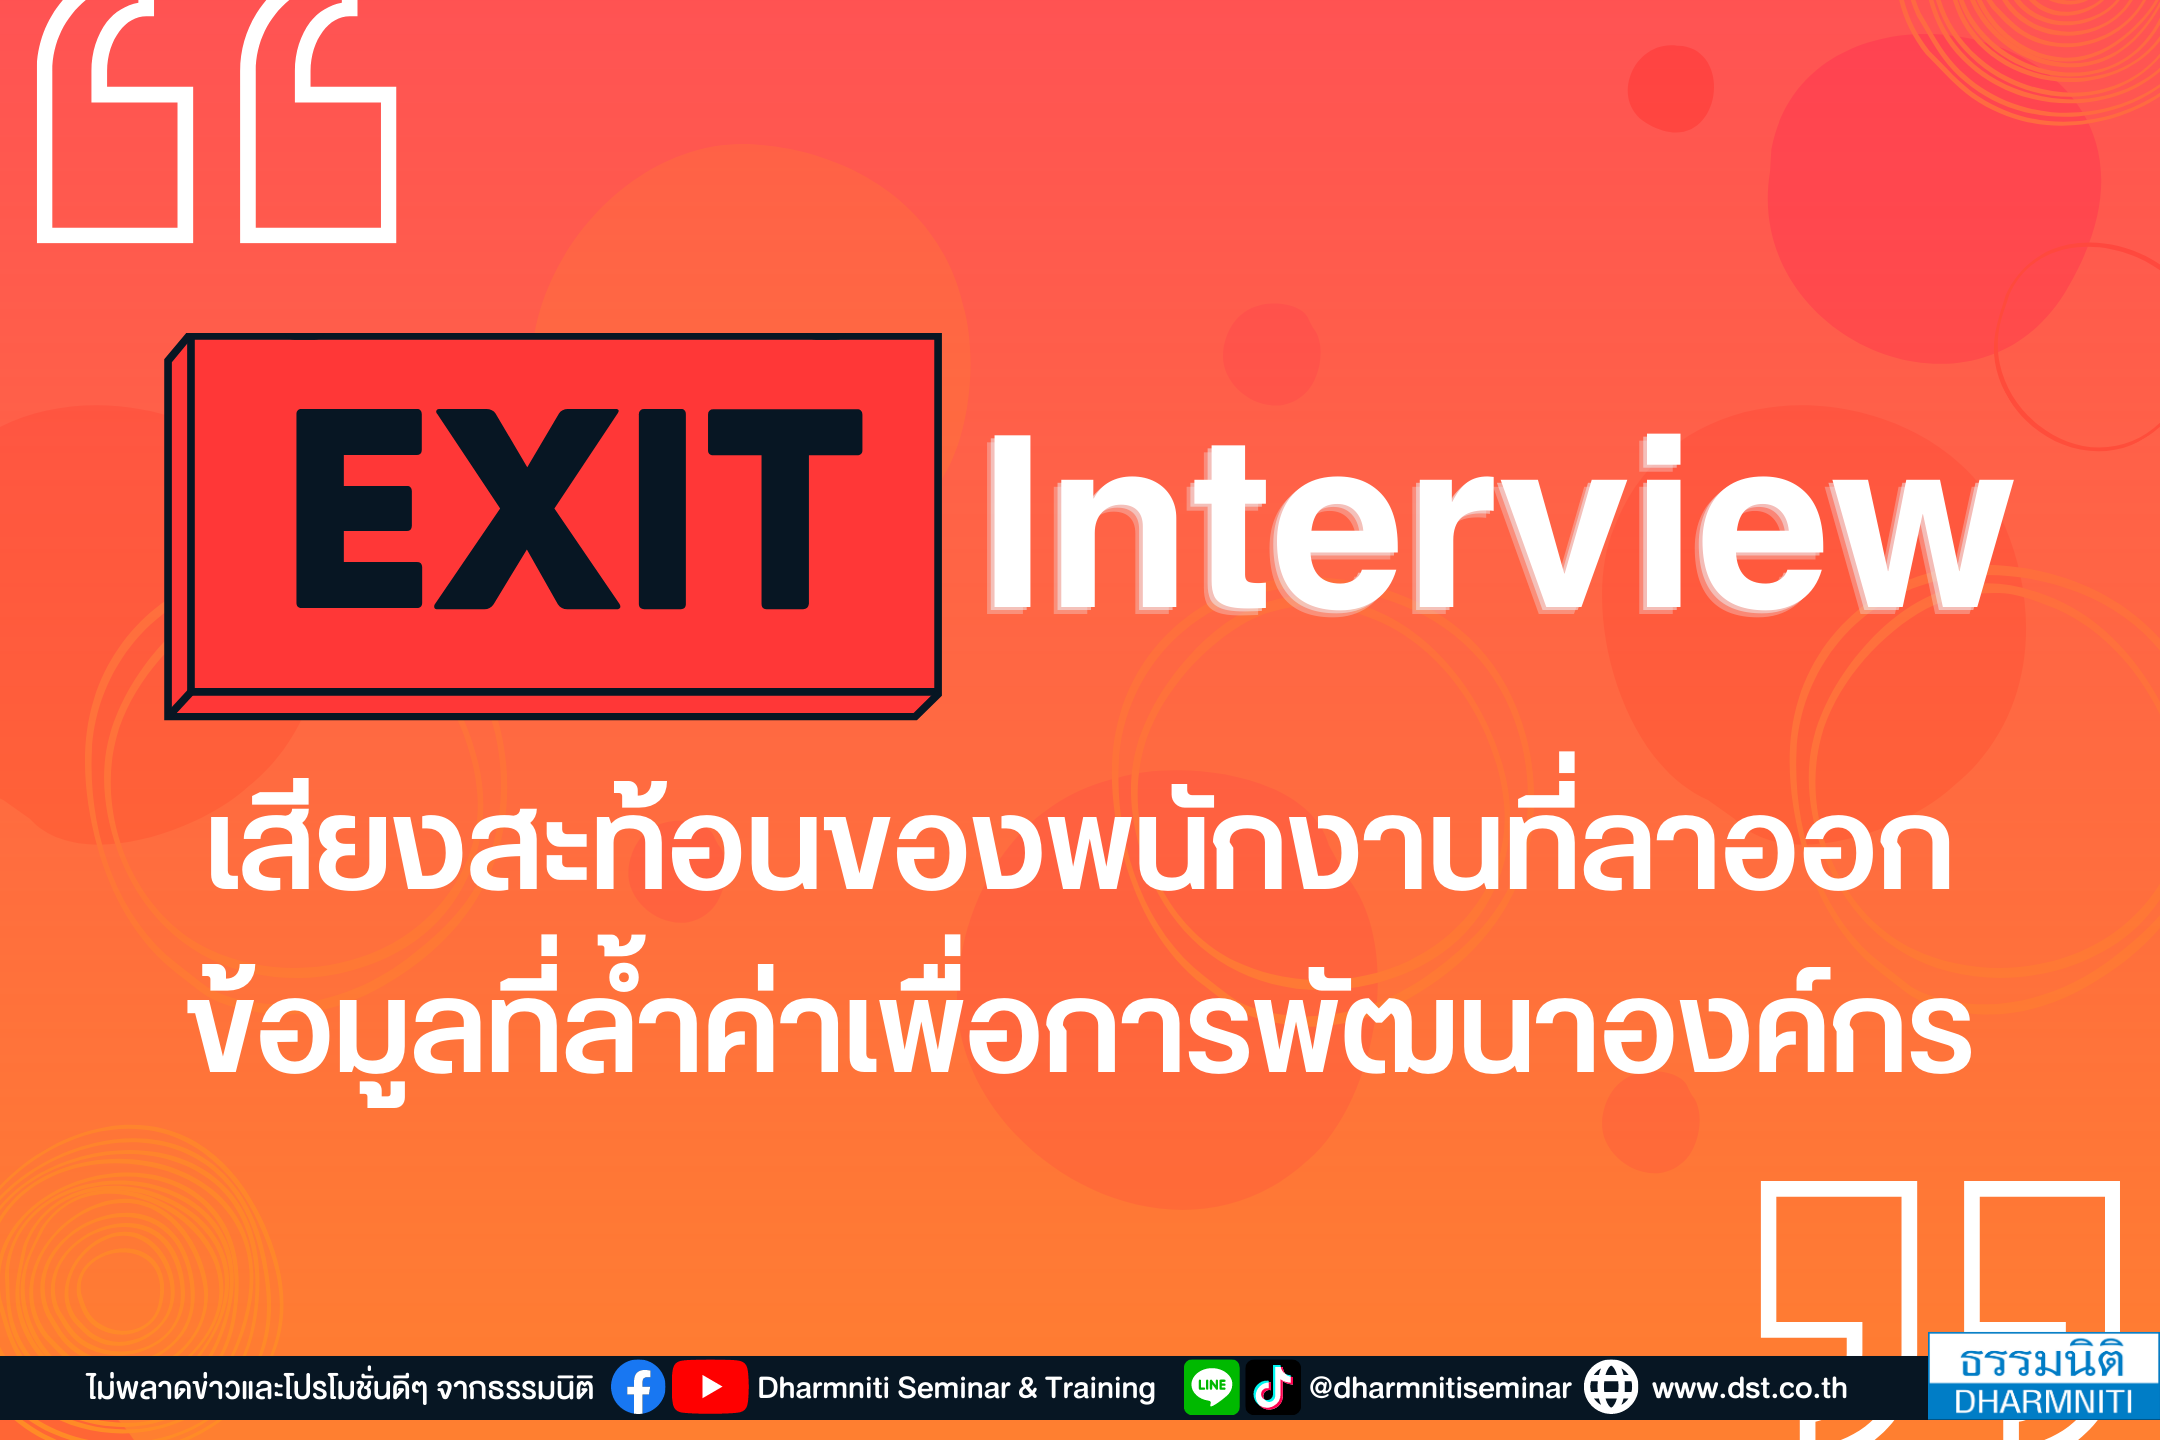 exit interview เสียงสะท้อนของพนักงานที่ลาออก ข้อมูลล้ำค่าเพื่อการพัฒนาองค์กร